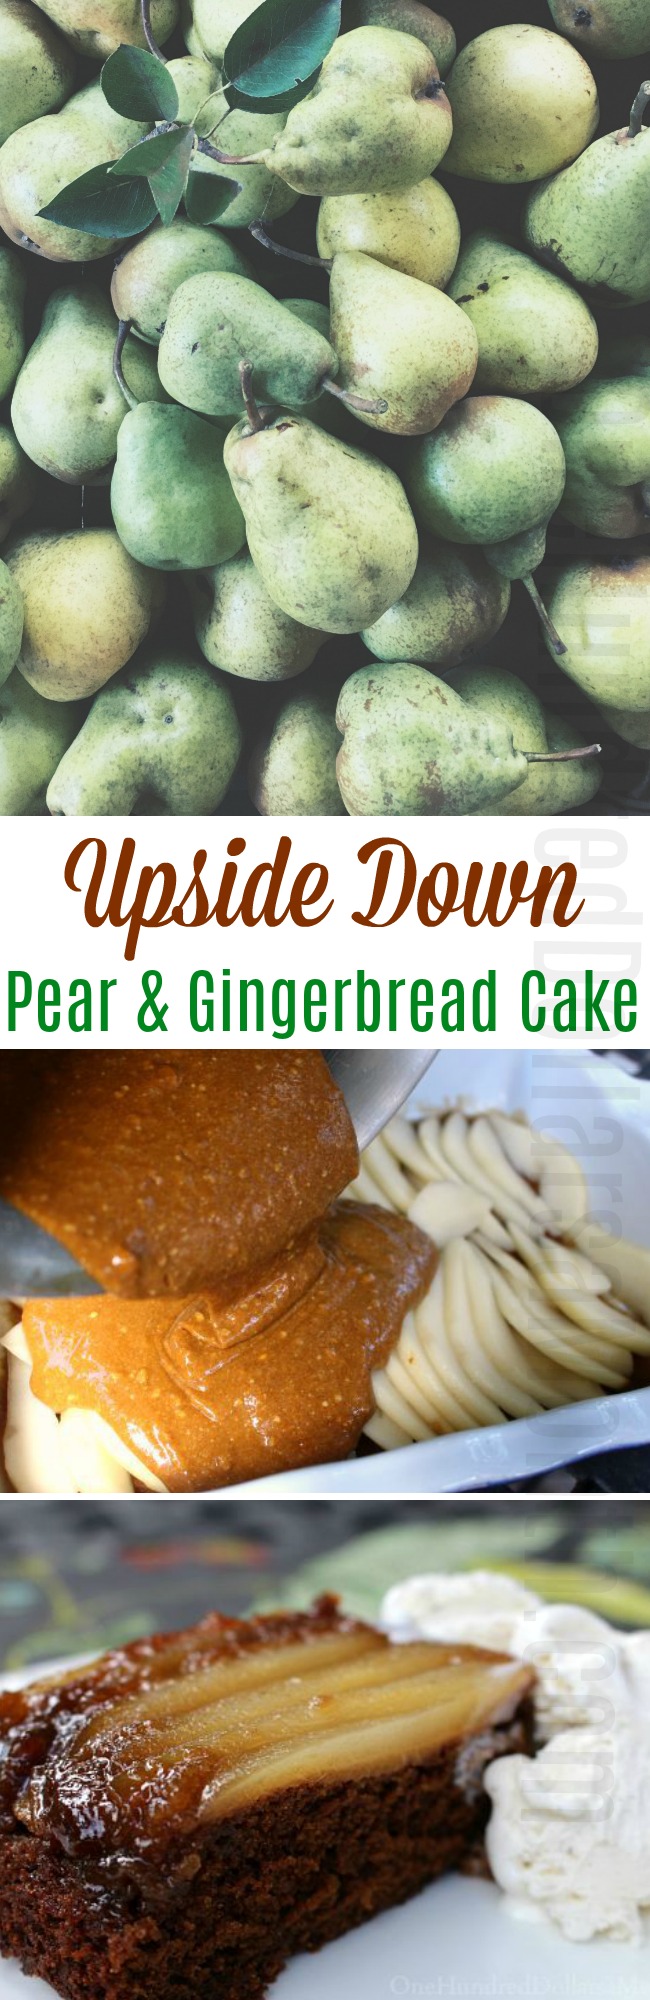 Upside Down Pear-Gingerbread Cake